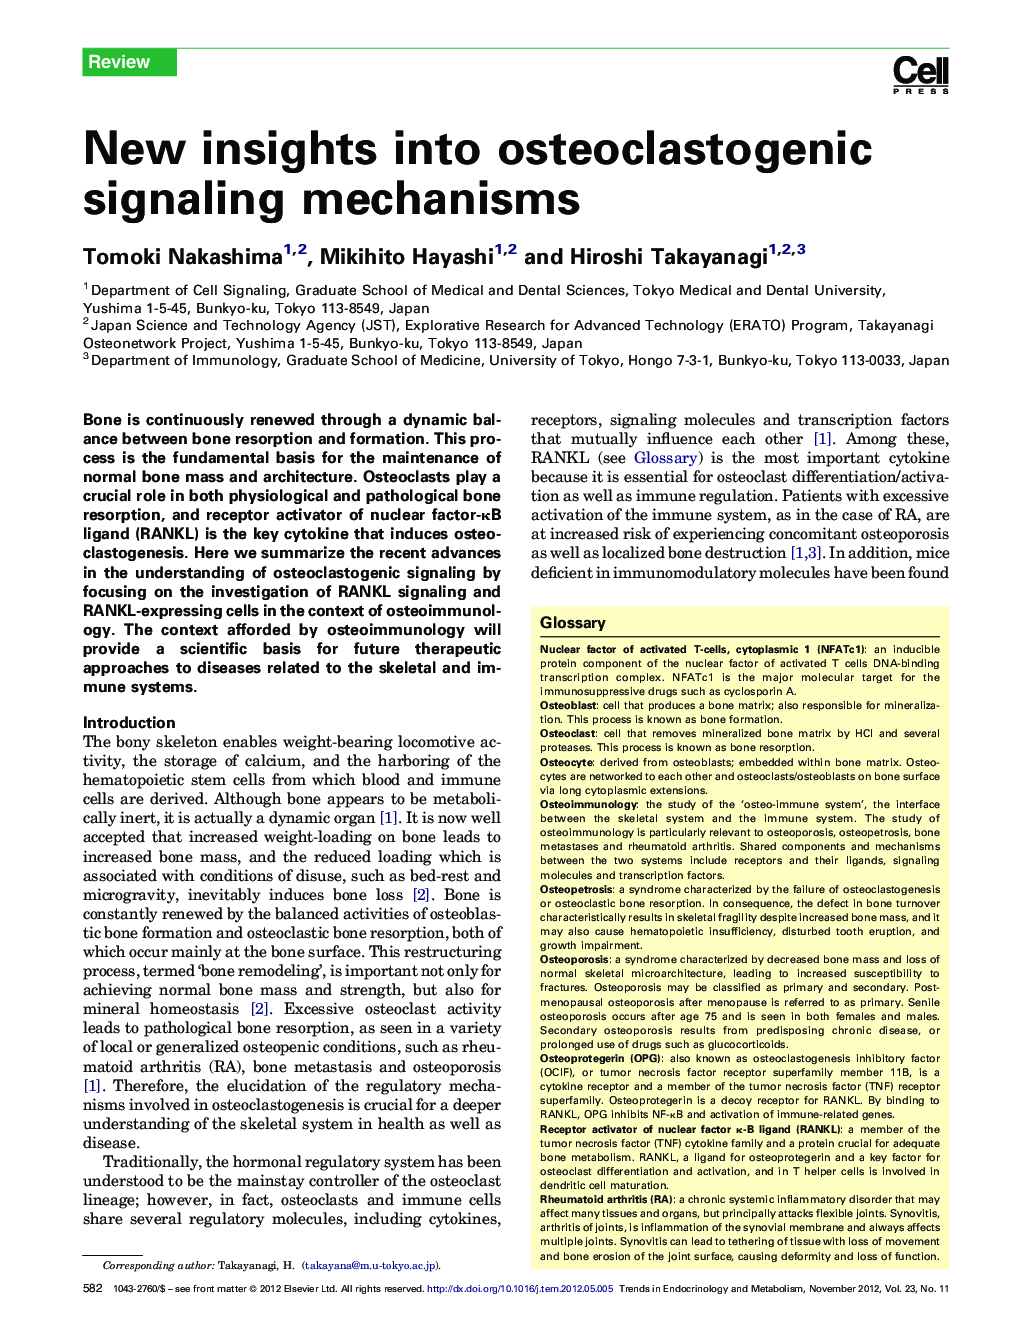 New insights into osteoclastogenic signaling mechanisms